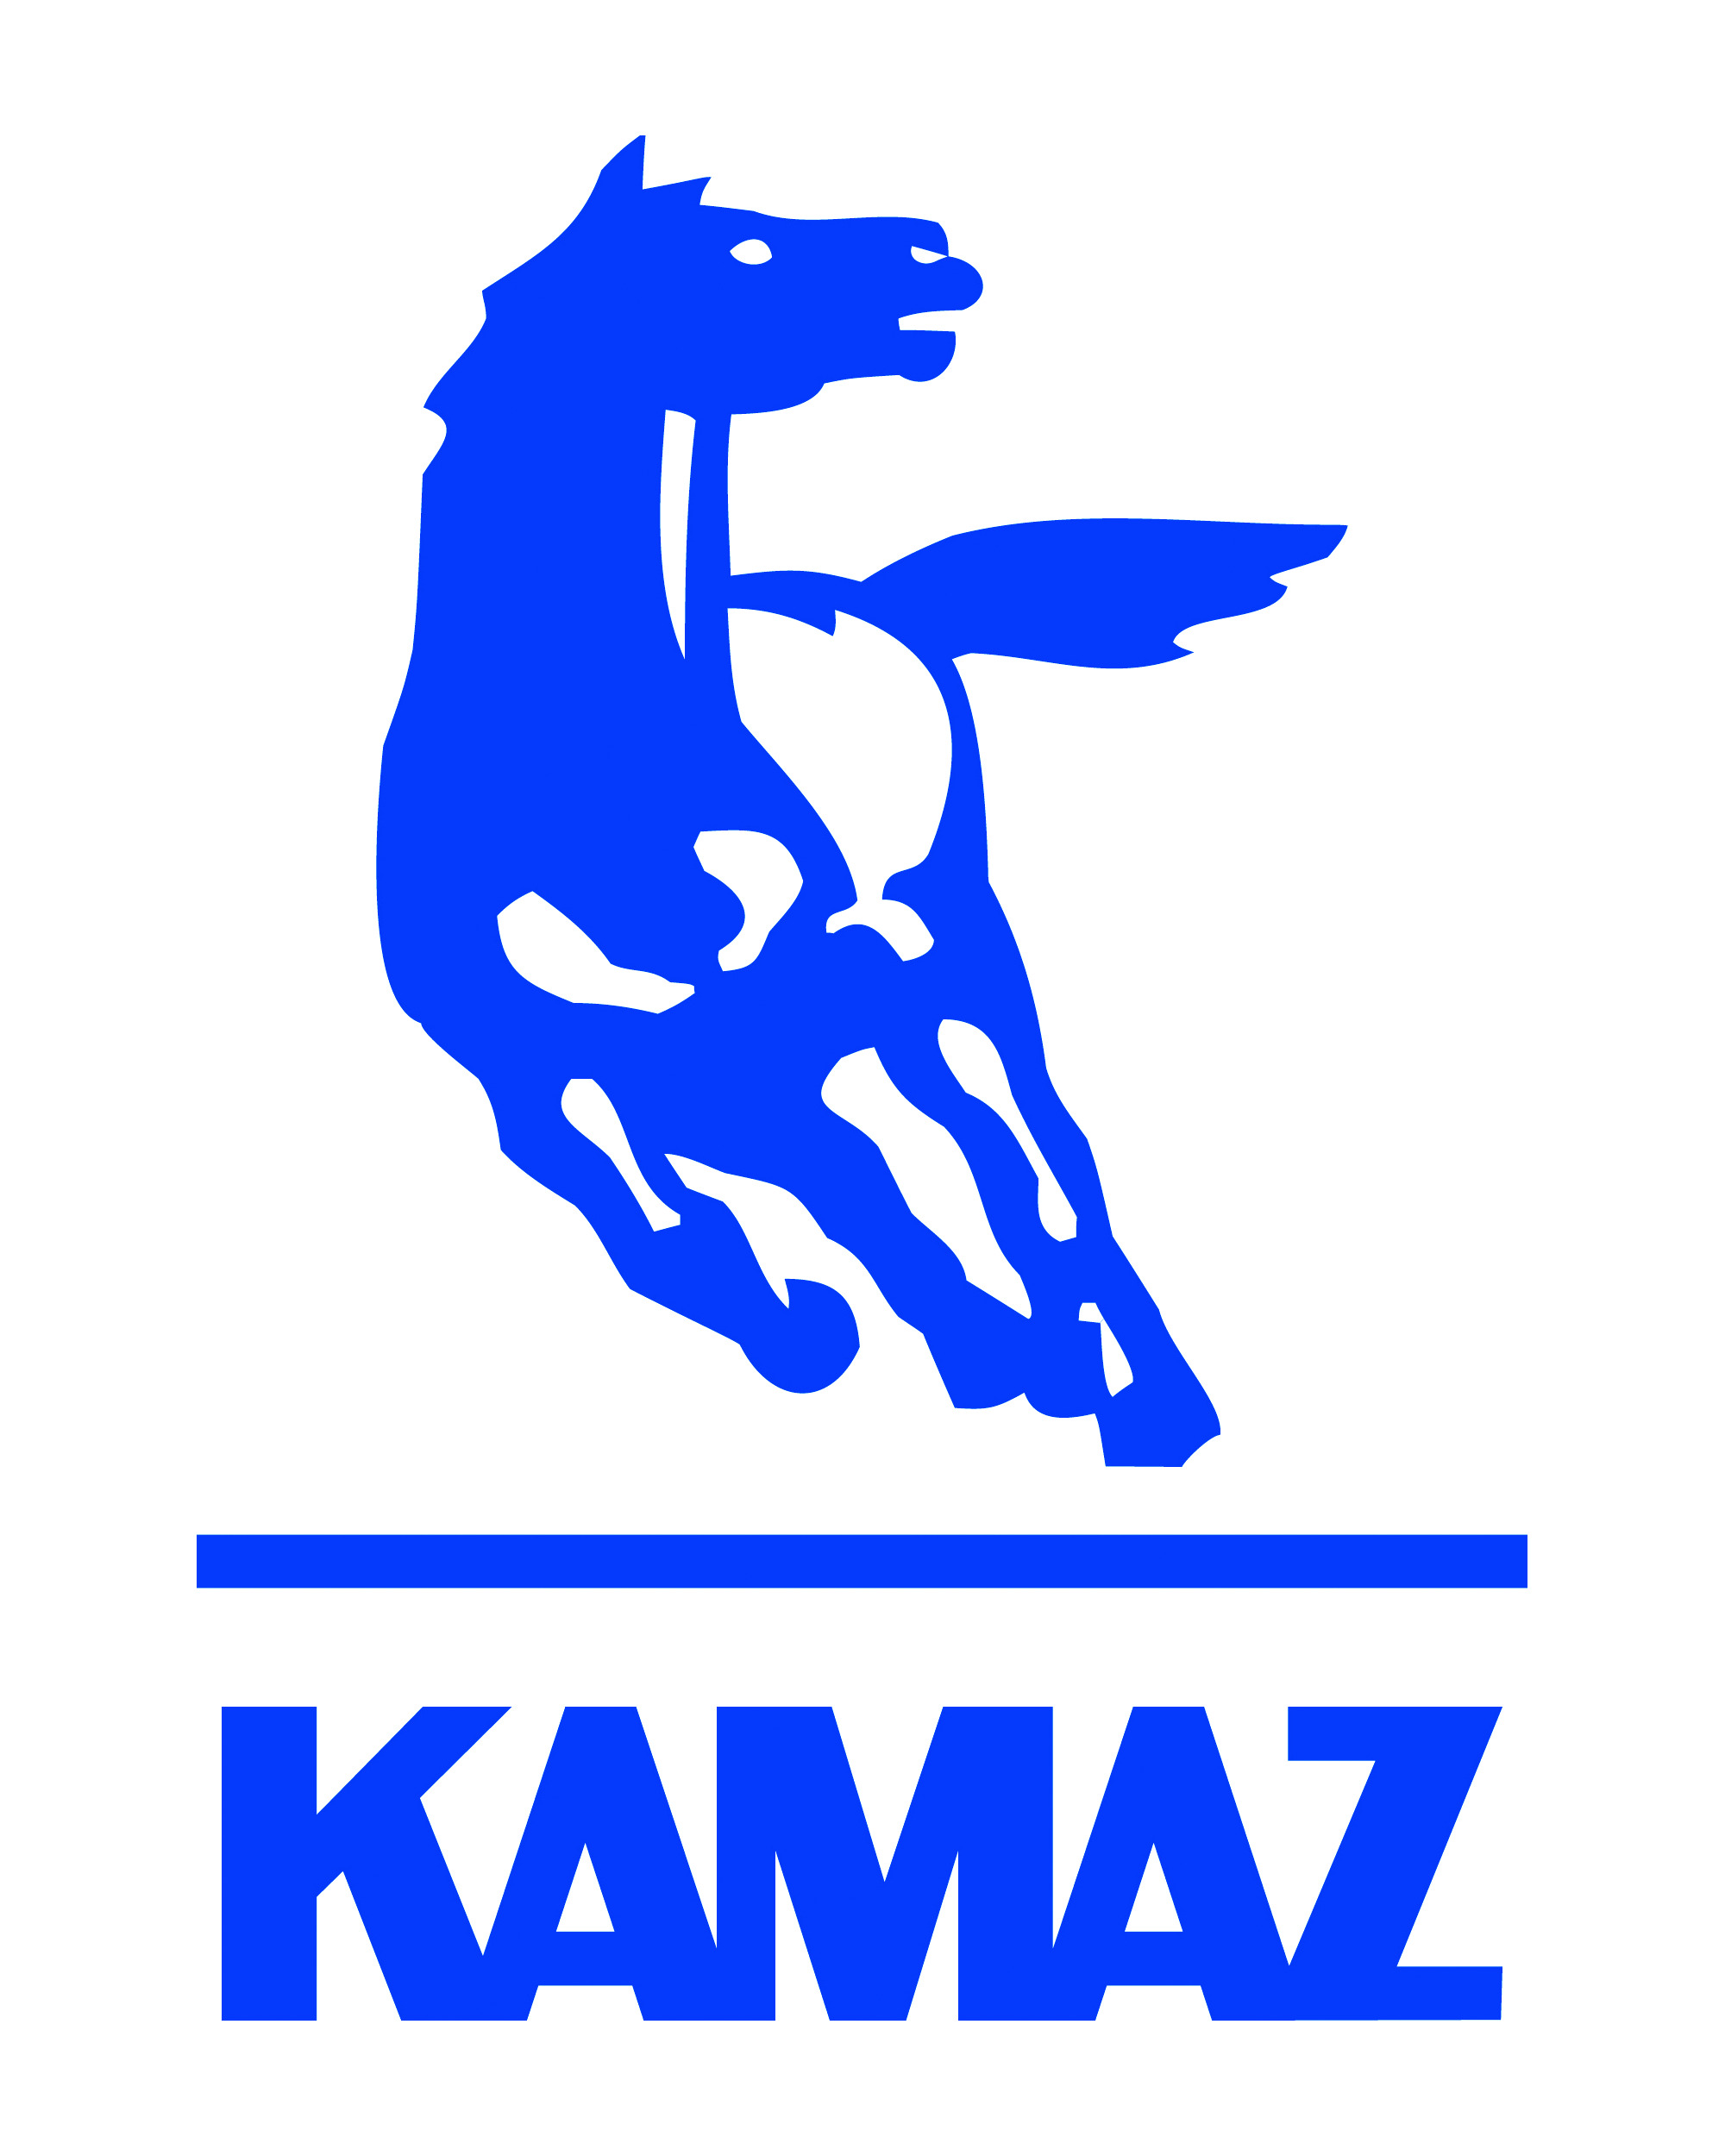 kamaz-logo